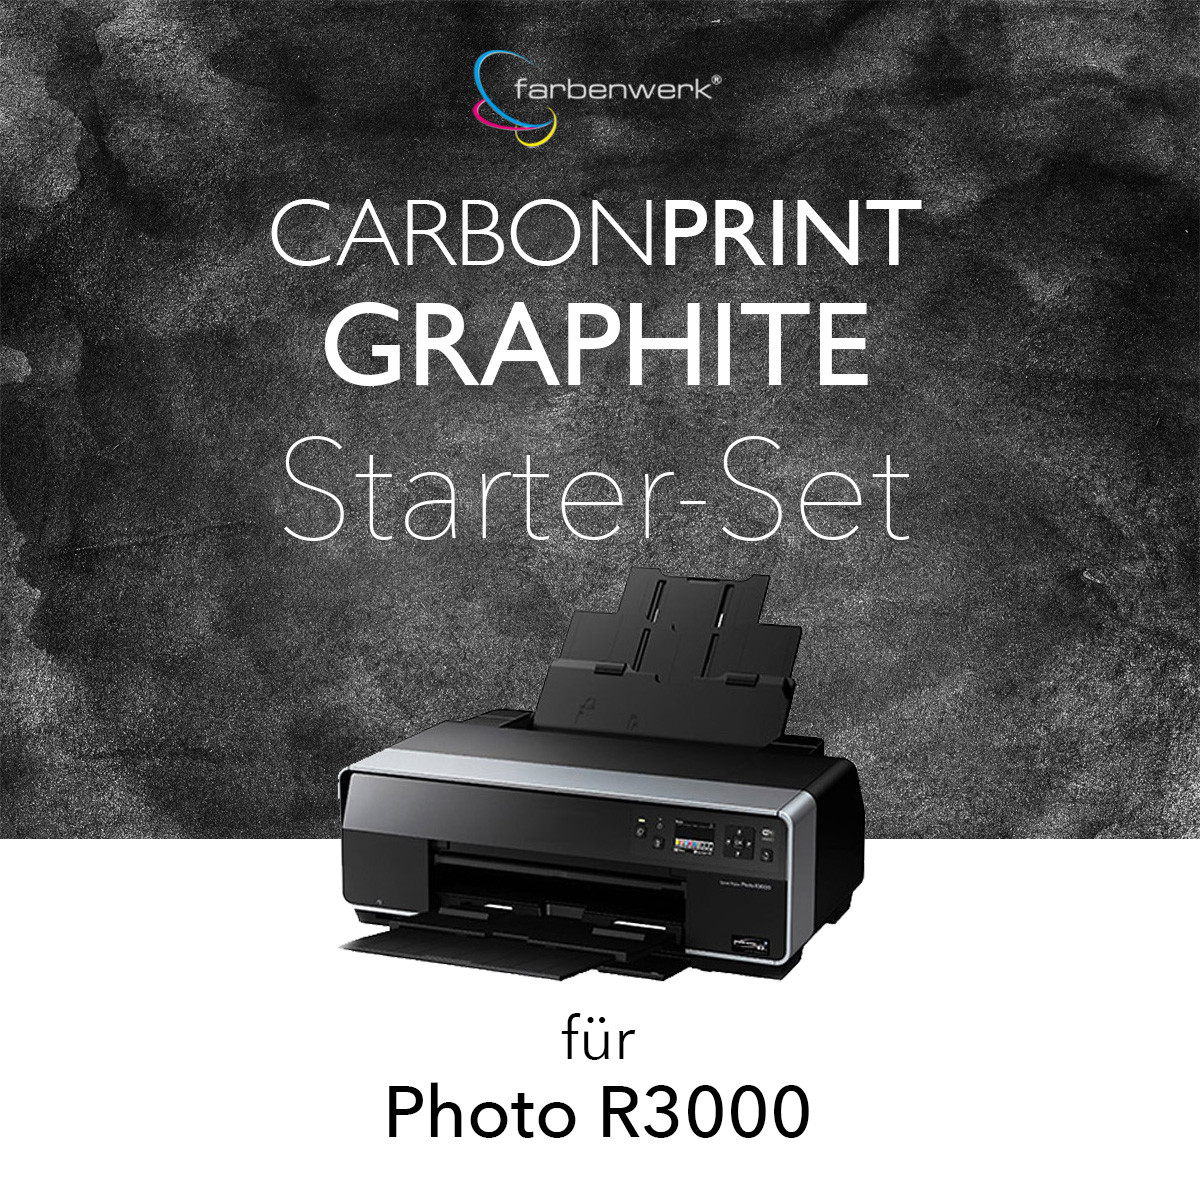 Starter-Set Carbonprint Graphite for Photo R3000